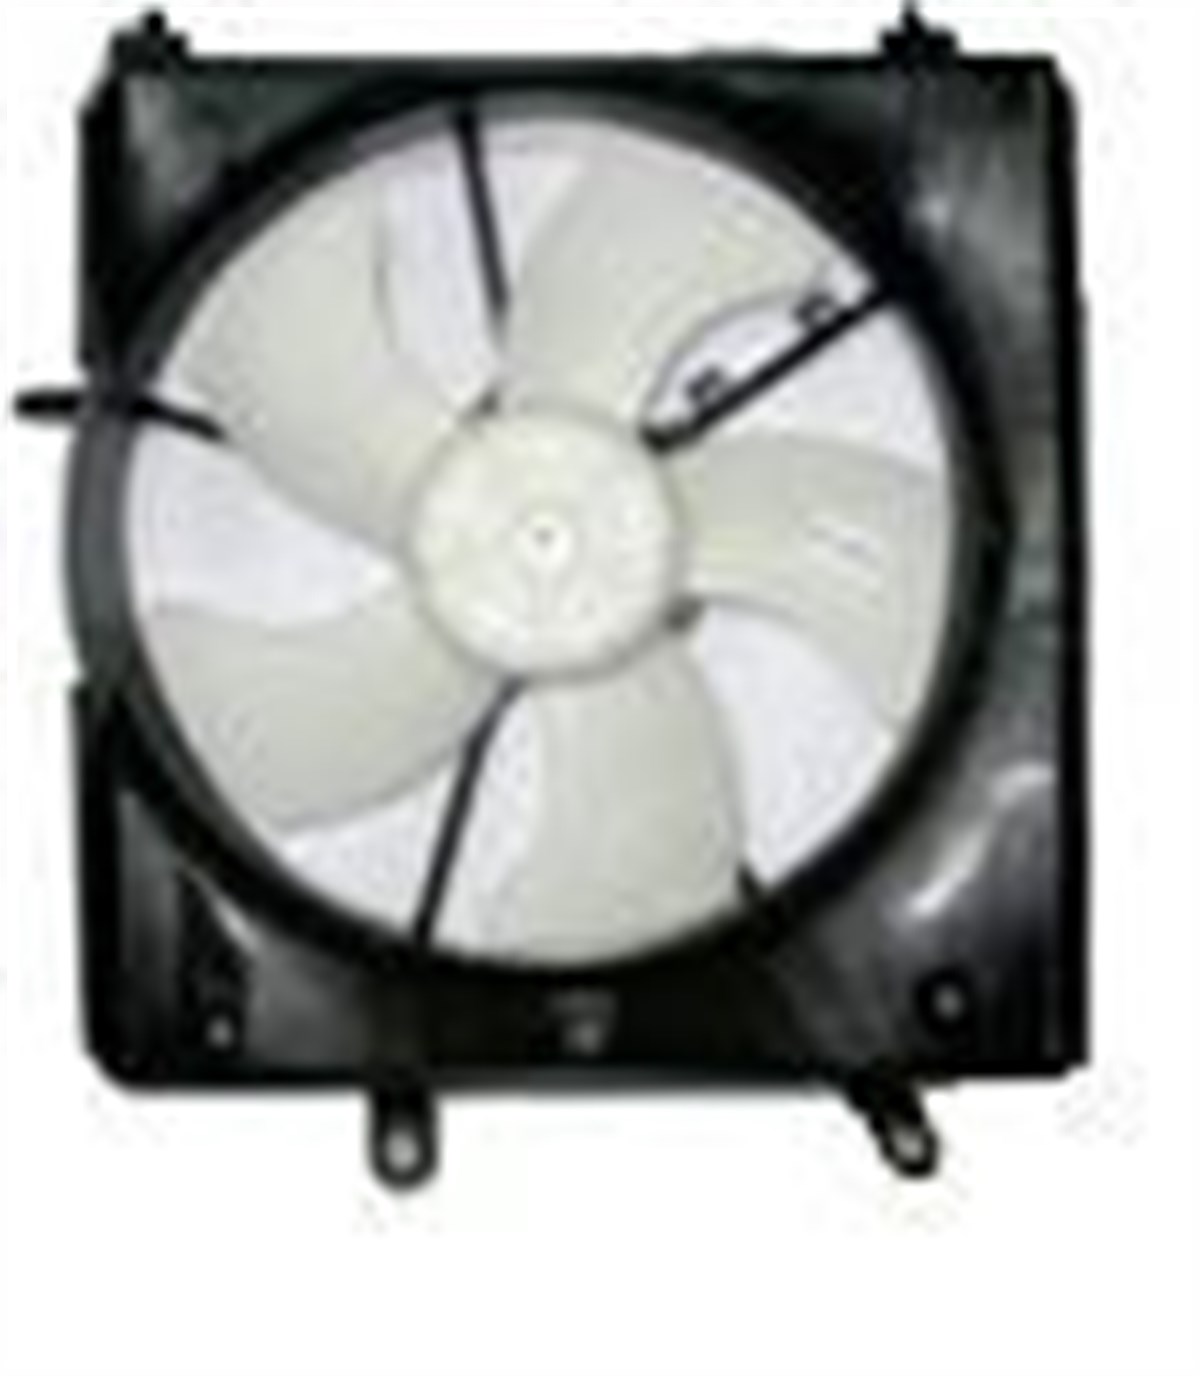 Fan Motoru 12V Honda Cıvıc Vtec Ls Cıty 01 03 | Ith Rfm4510 | ITHRFM4510 |  Parcatikla.com